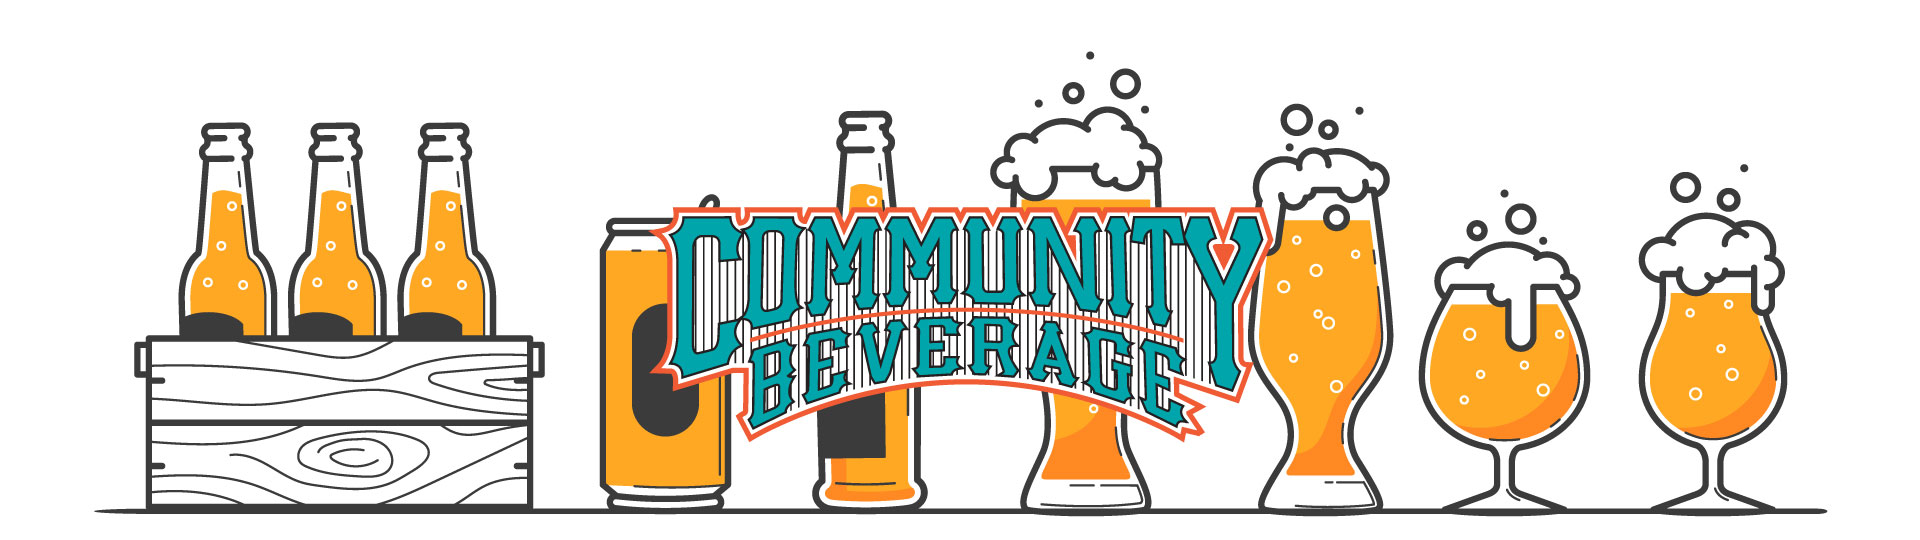 Community Beverage